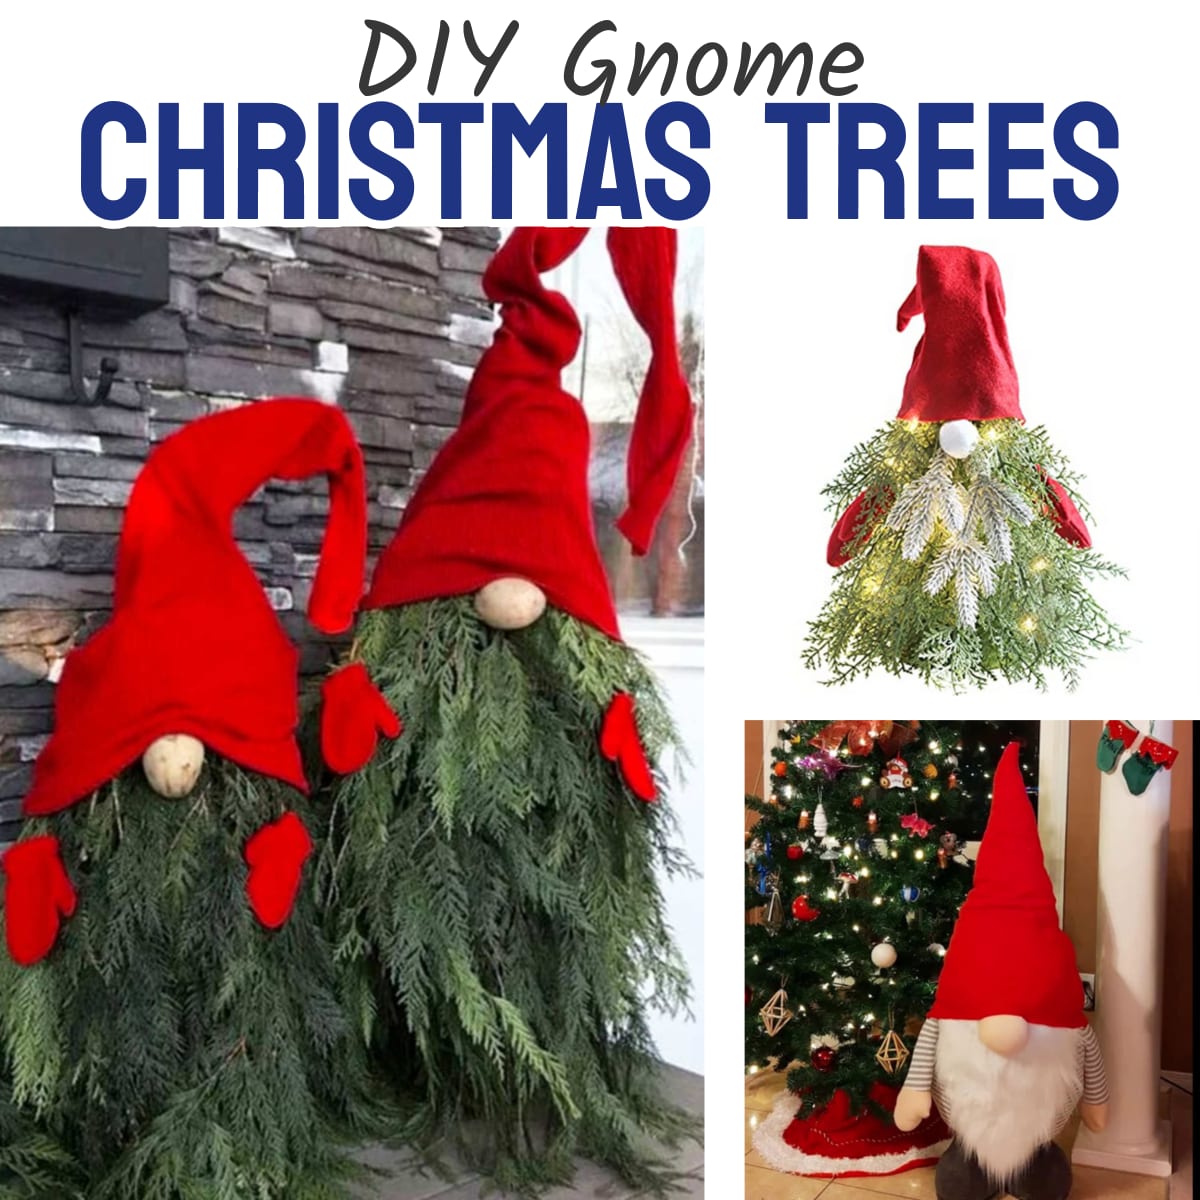 ADORABLE Gnome Christmas Tree Ideas